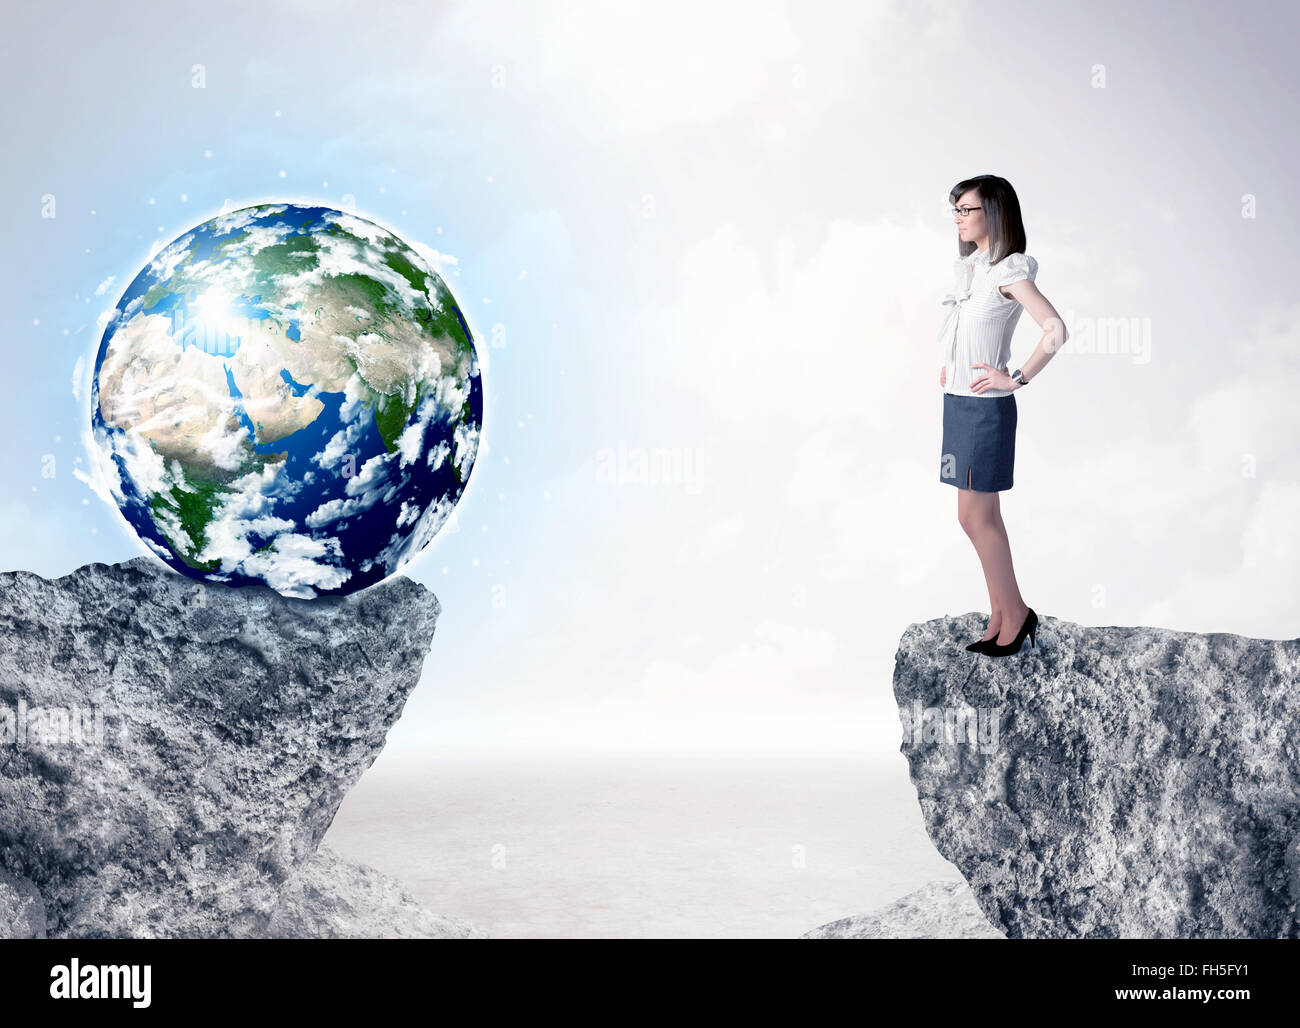 Businesswoman on rock mountain with a globe Stock Photo